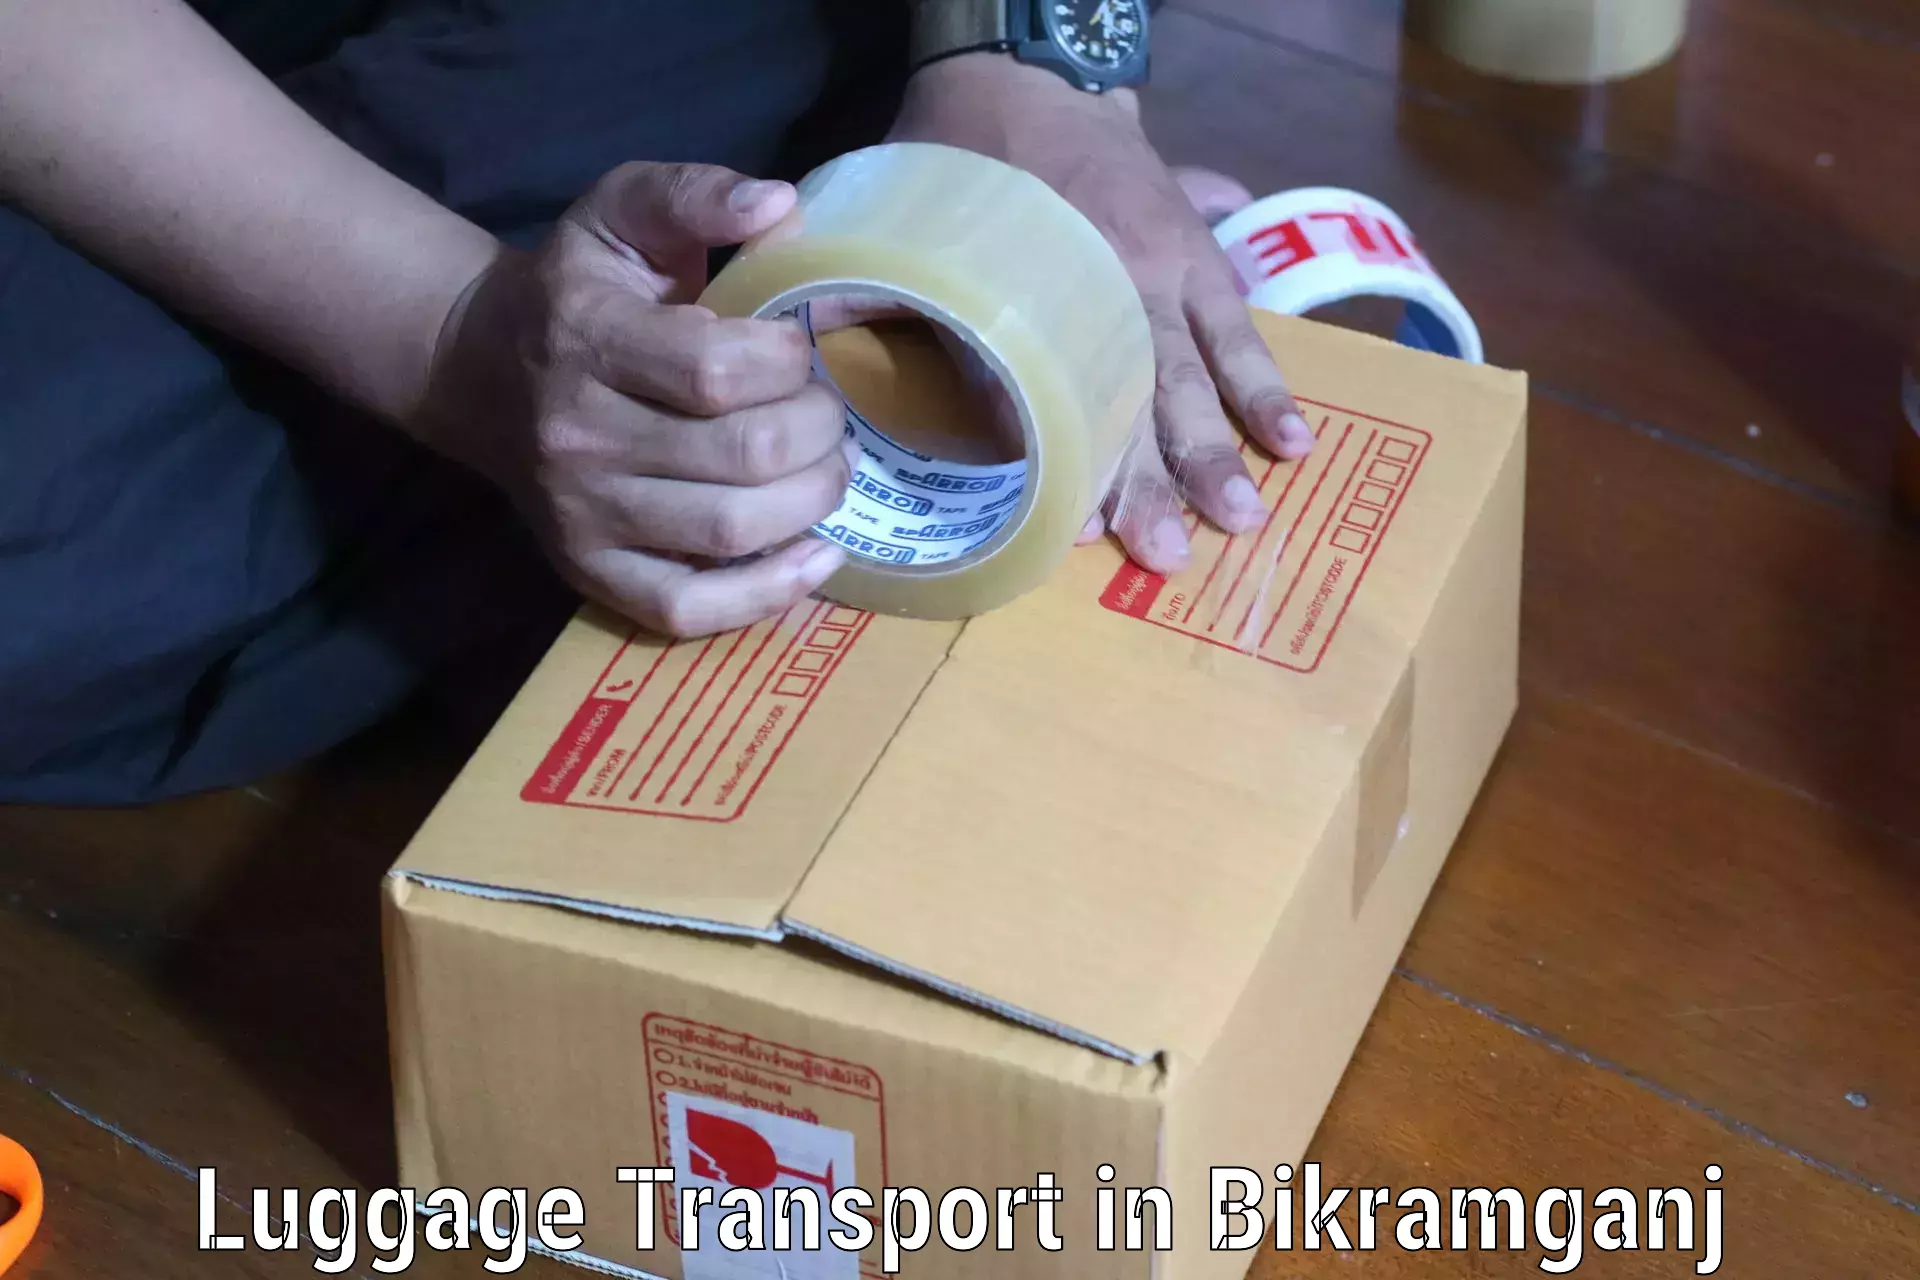 Luggage transport rates in Bikramganj